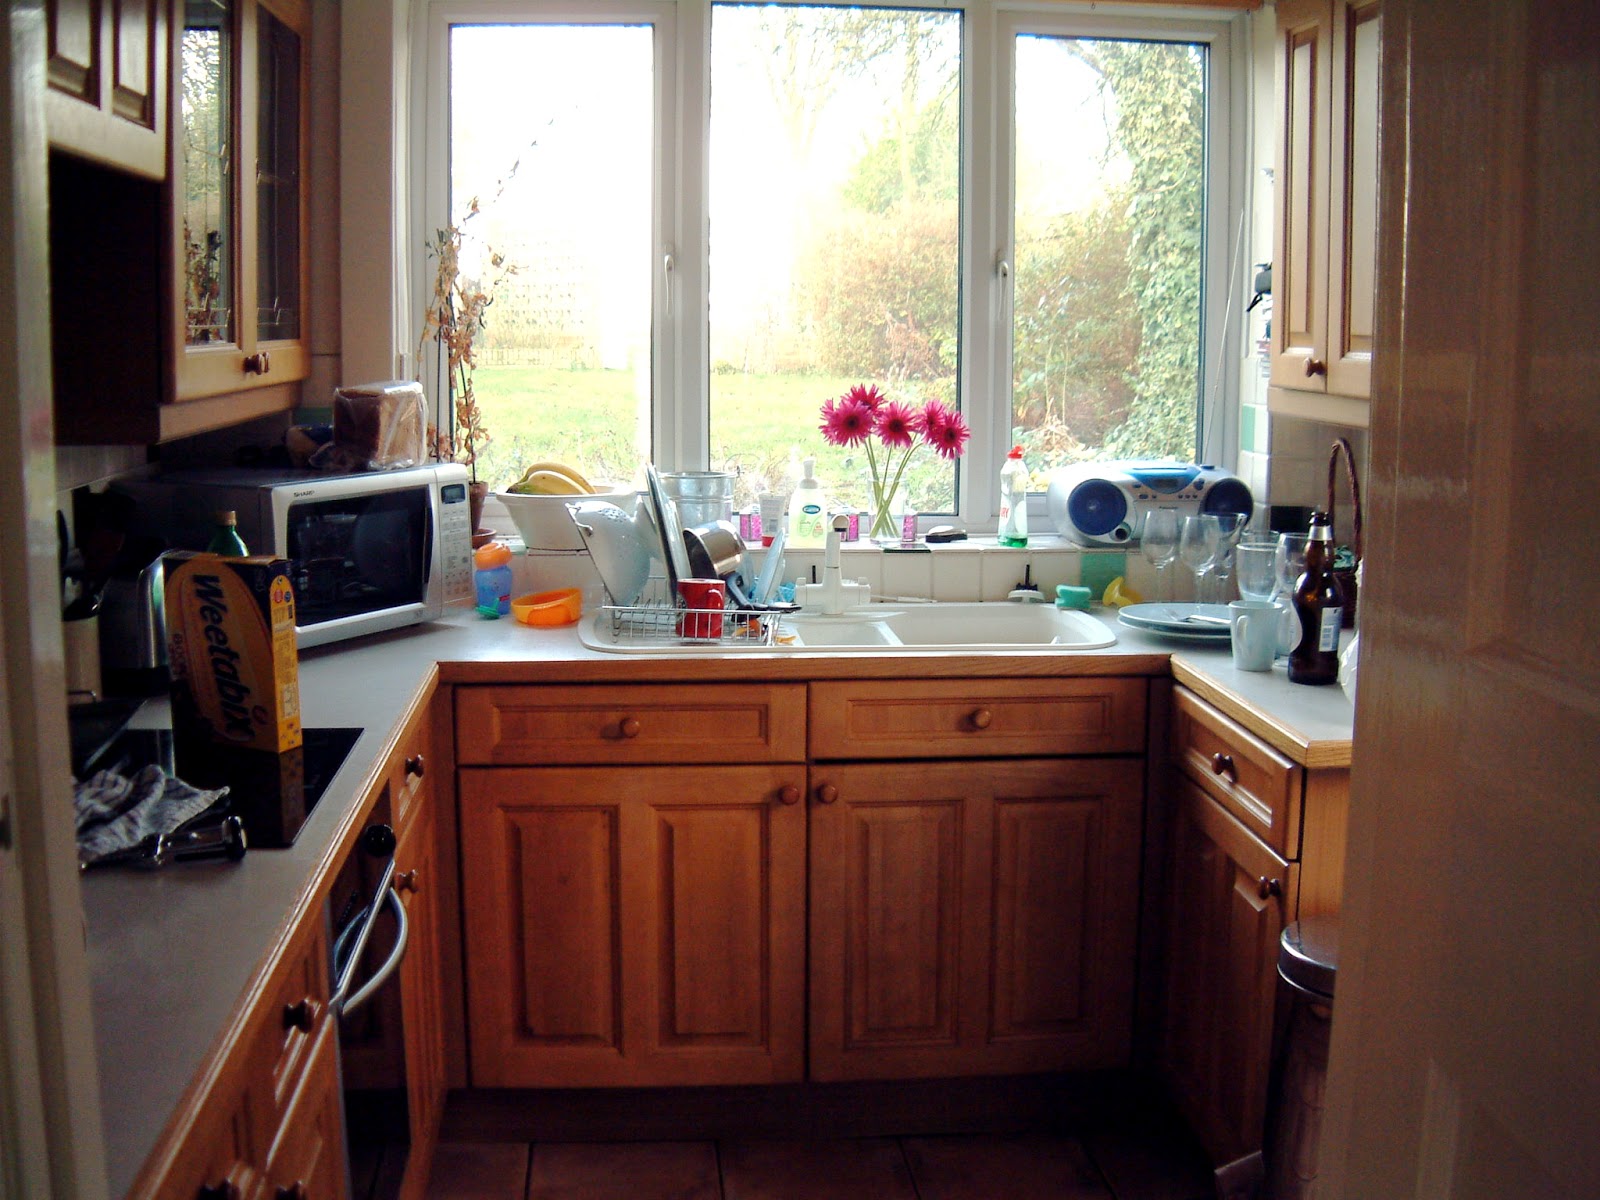 Home Improvements: Kitchen renovation ideas